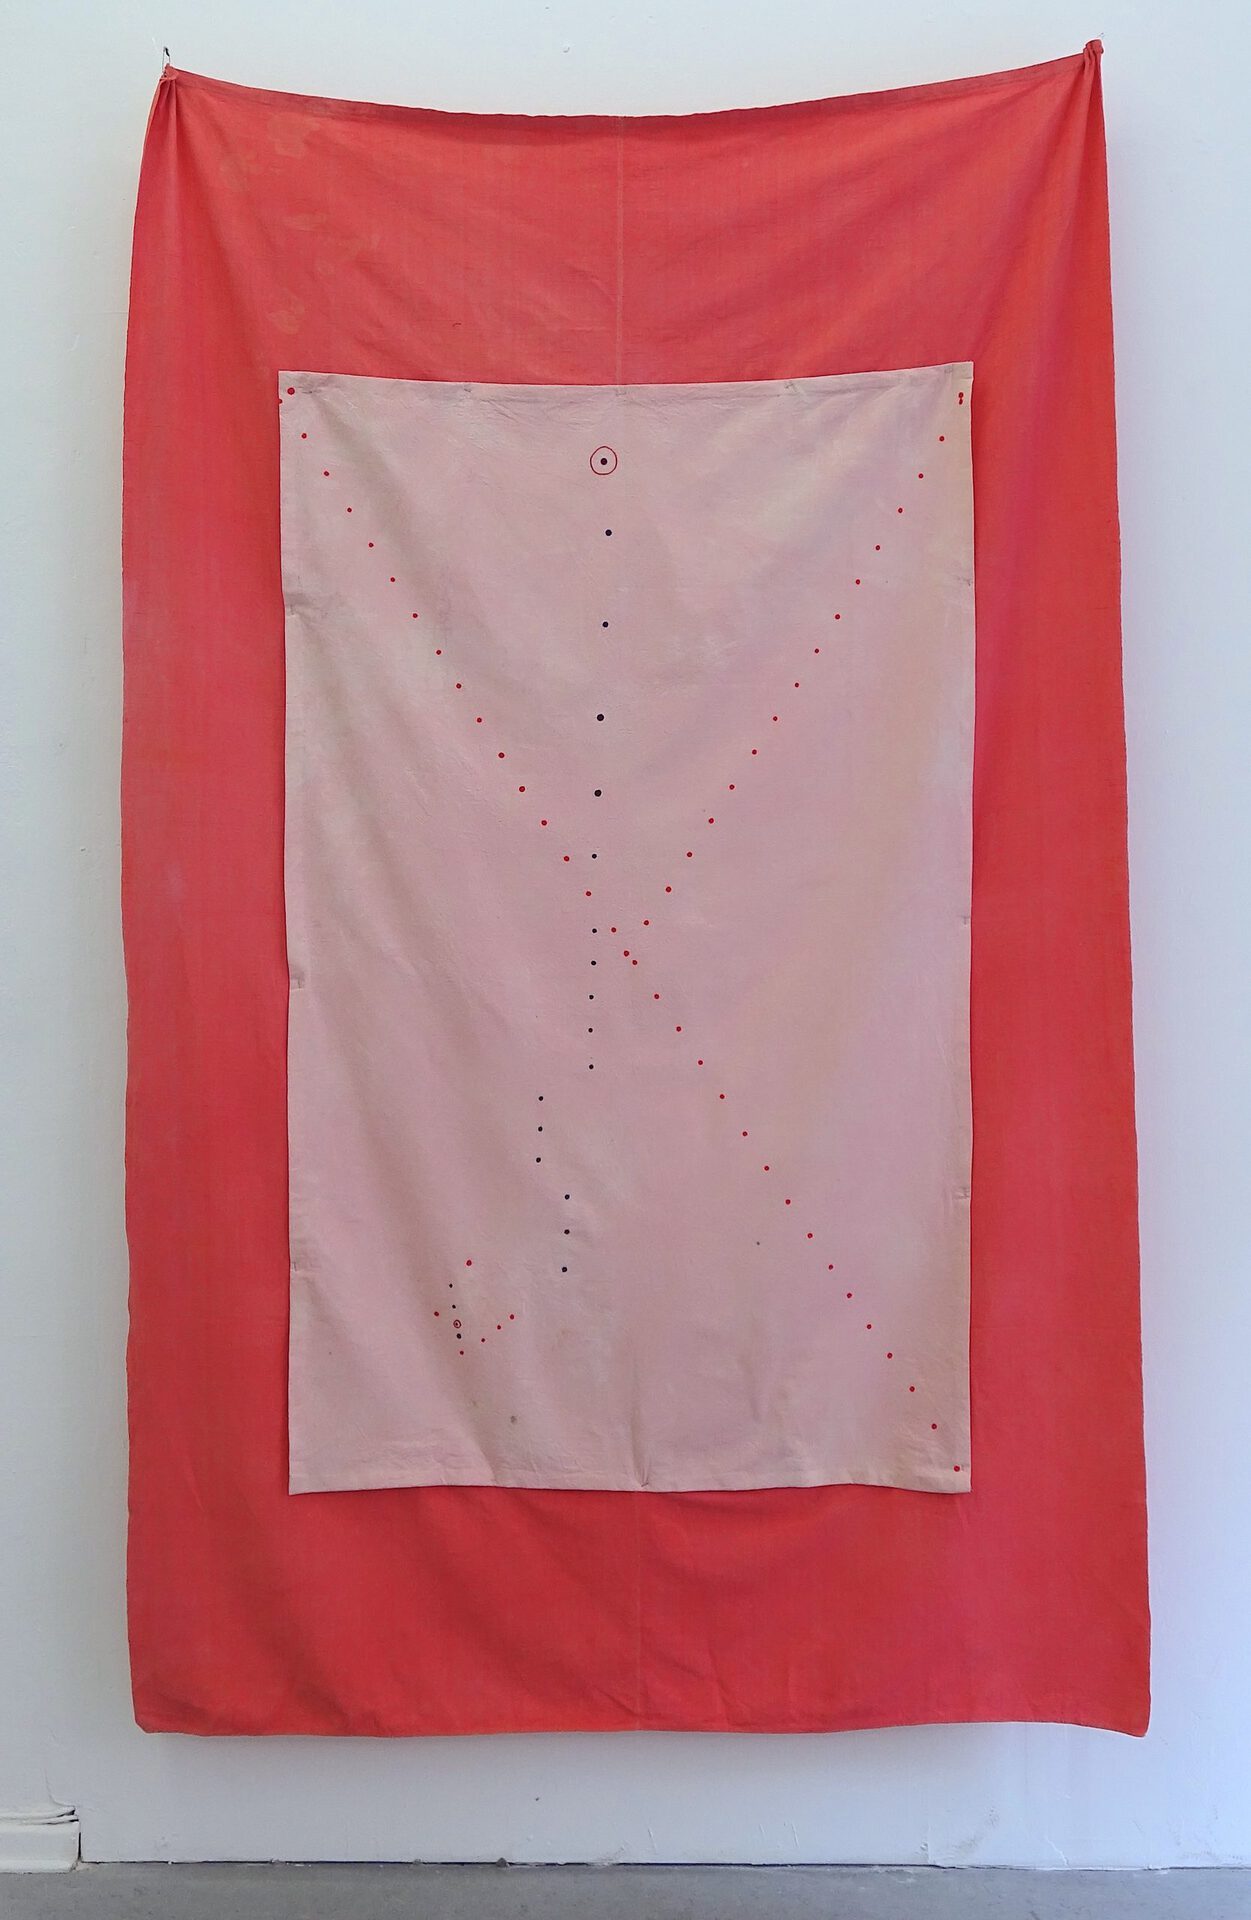 Monika Dorniak, ZM 7 to TH 1, 2016, acryl and thread on textile, 175 x 105 cm